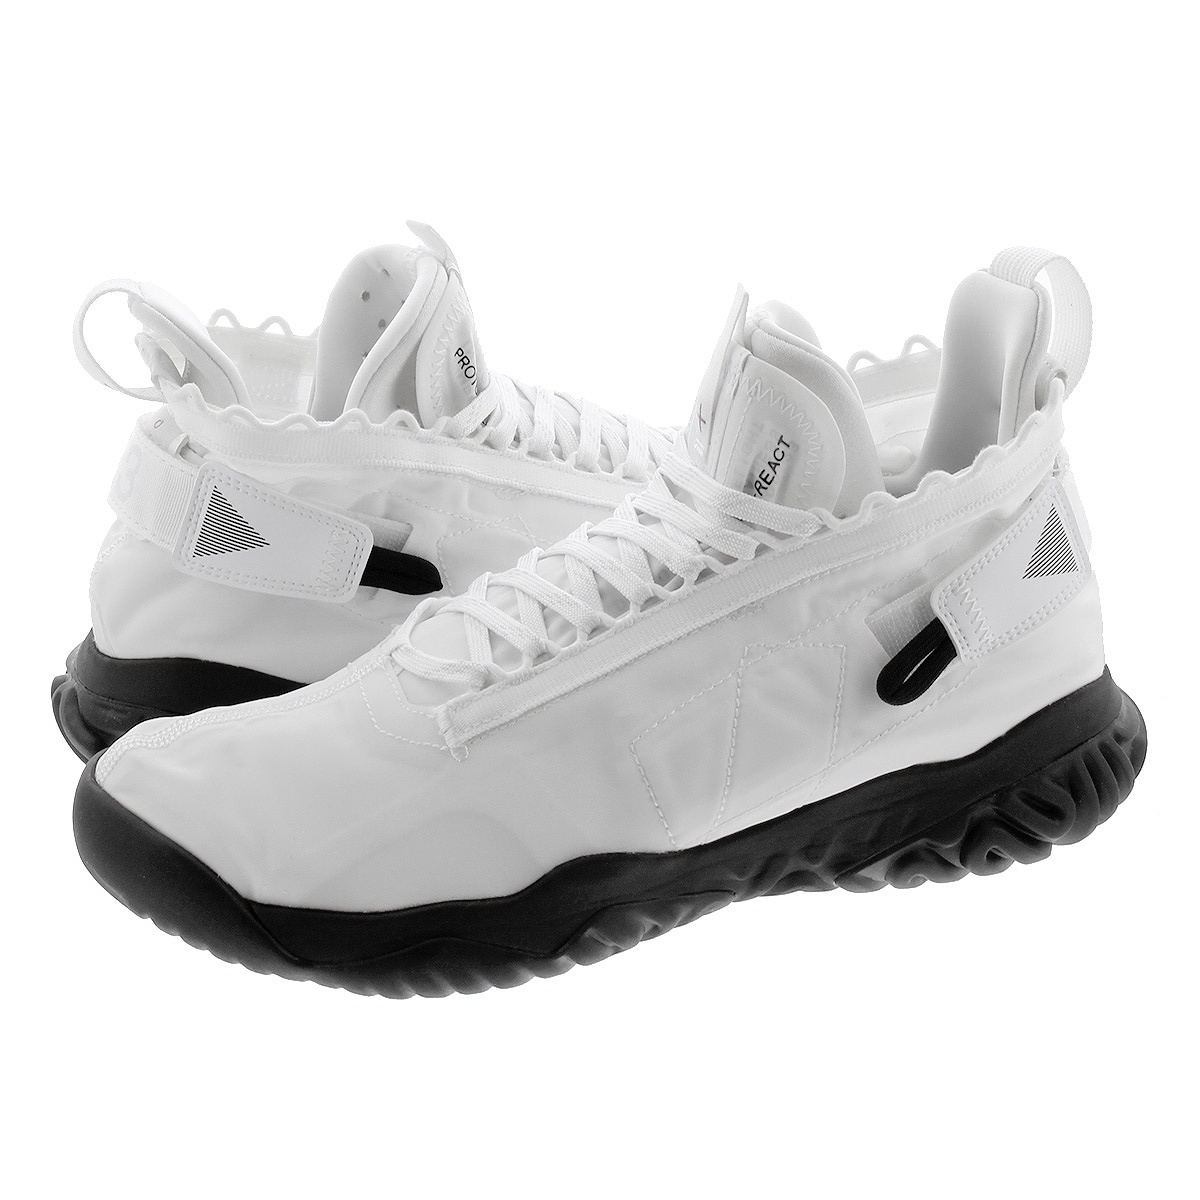 60 Off Nike Jordan Proto React ナイキ ジョーダン プロト リアクト White White Black Bv1654 100 Select Shop Lowtex Www Clinicadocoracaose Com Br